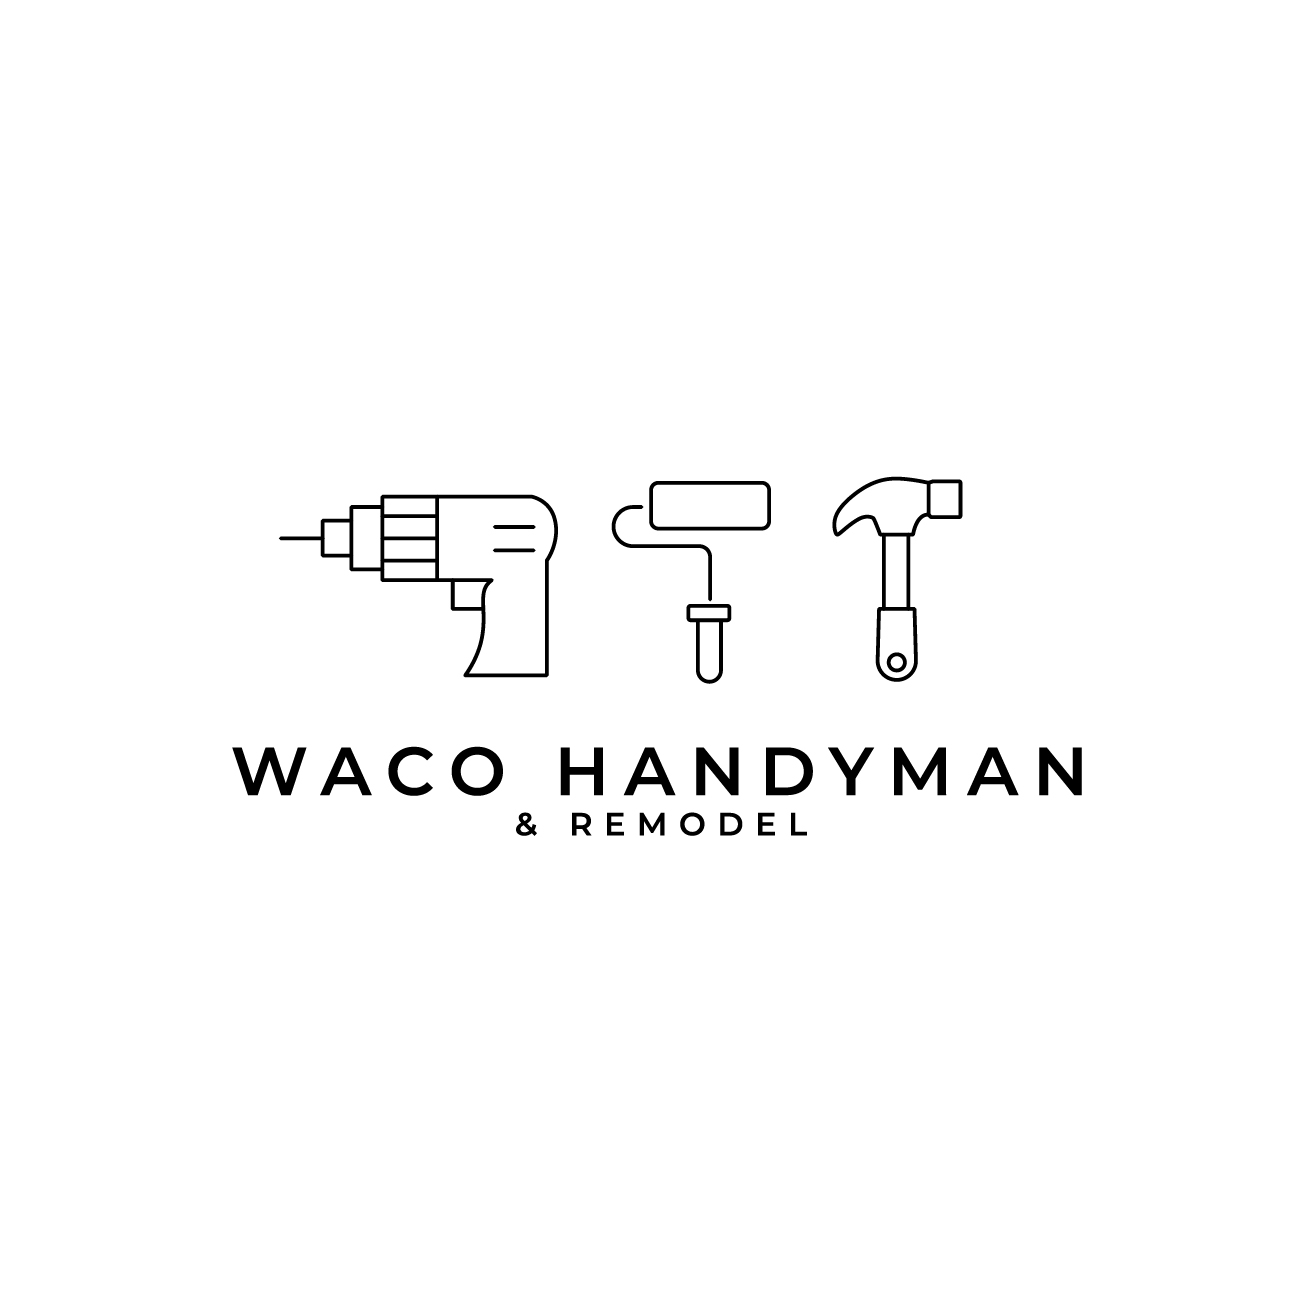 Waco Handyman